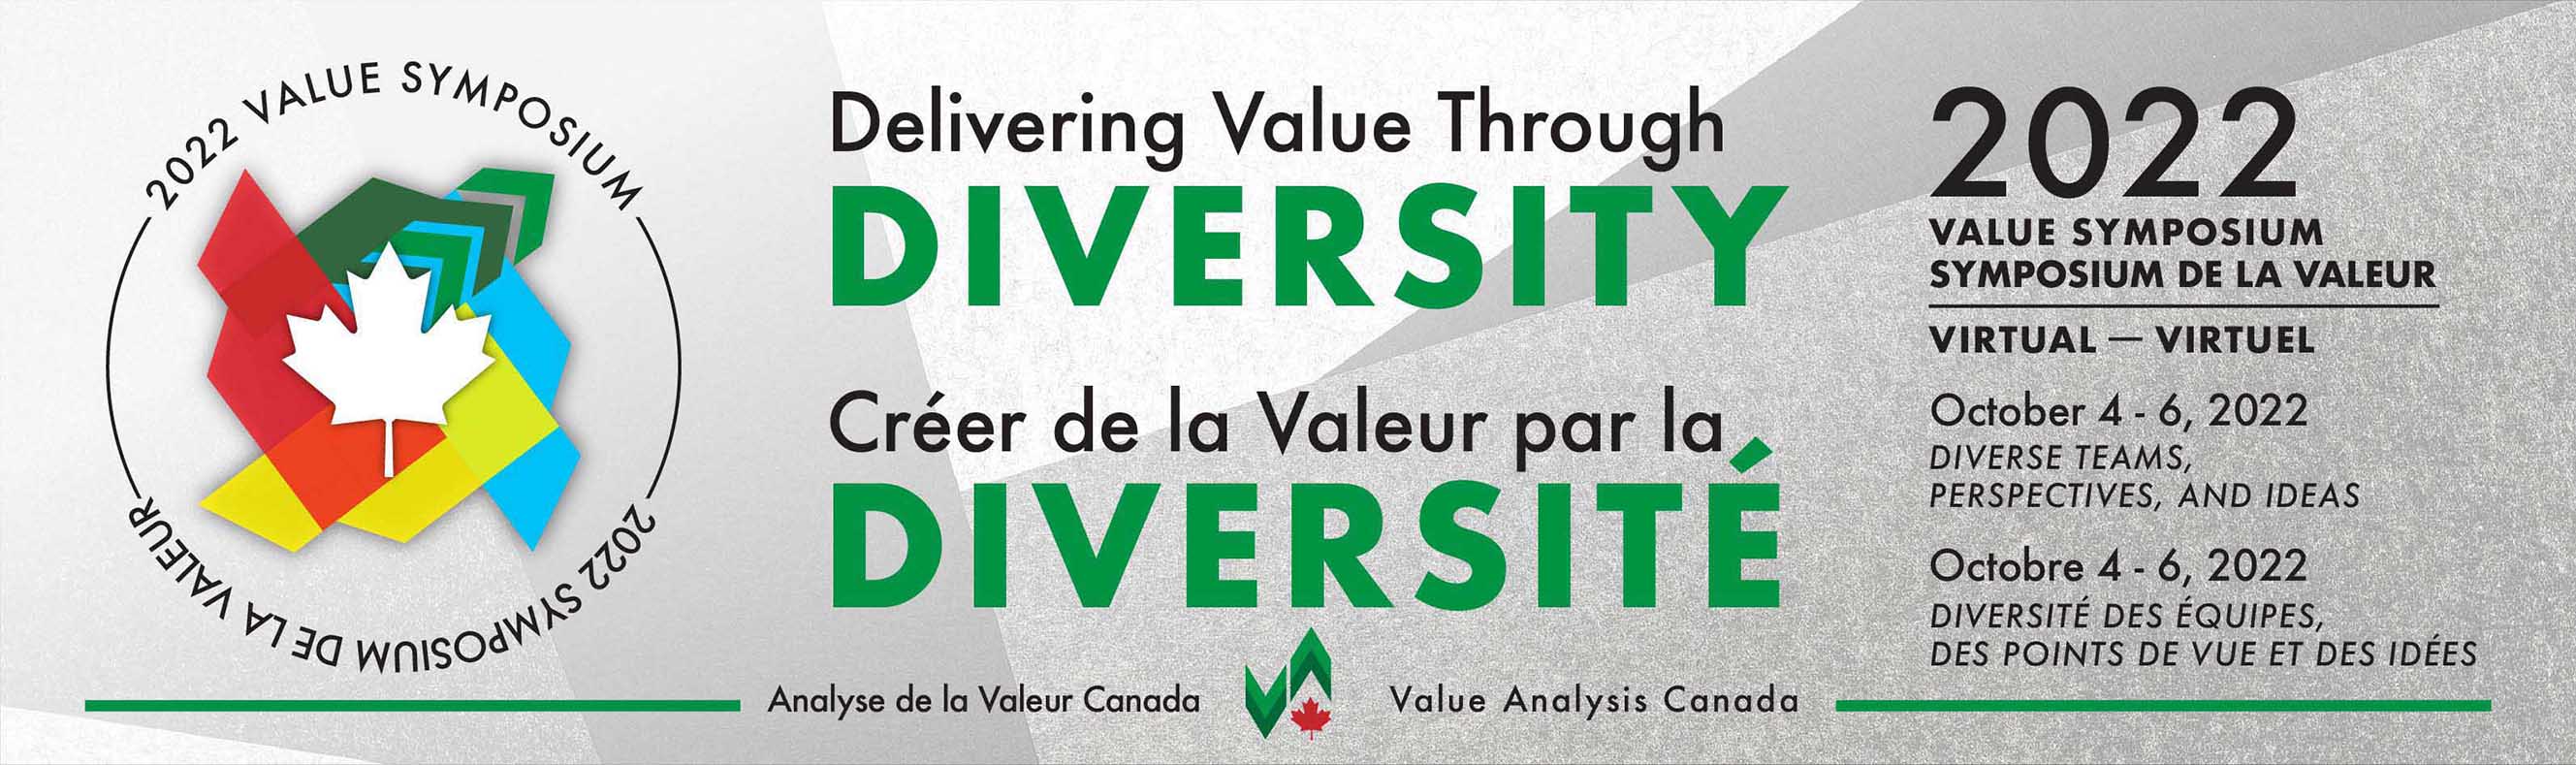 Delivering Value Through Diversity